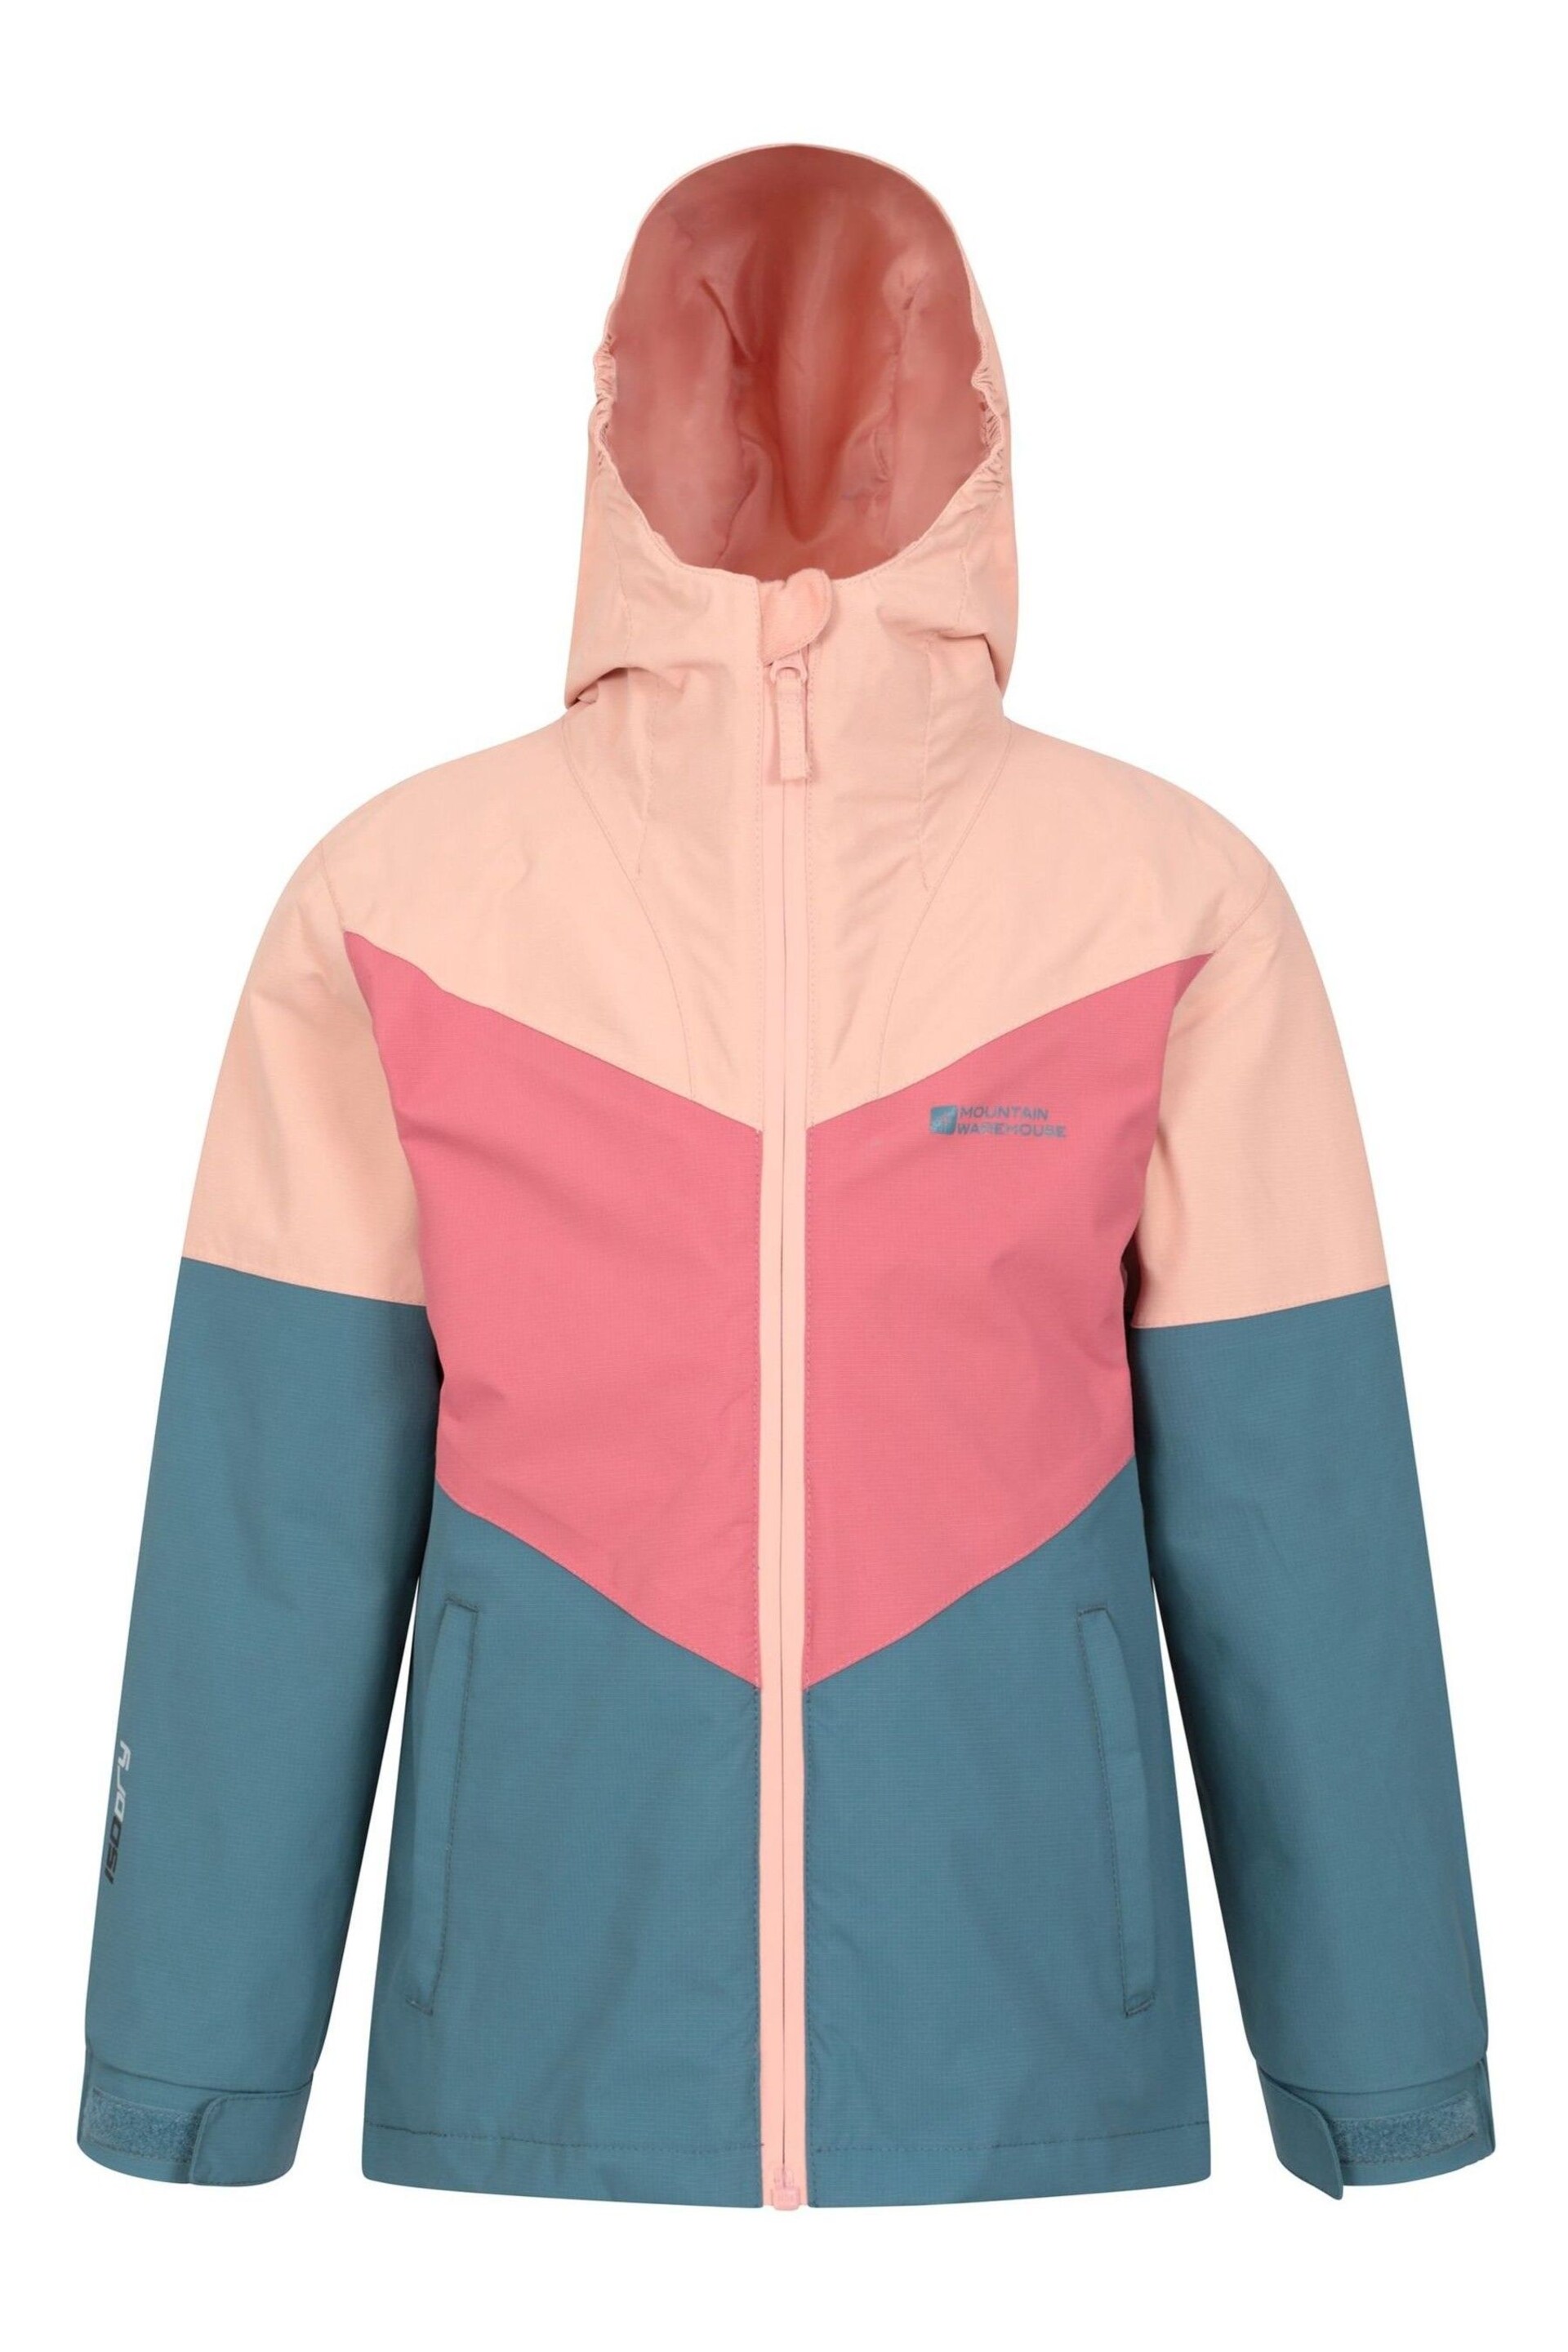 Mountain Warehouse Pink Kids Lightning 3 In 1 Waterproof Jacket - Image 4 of 4